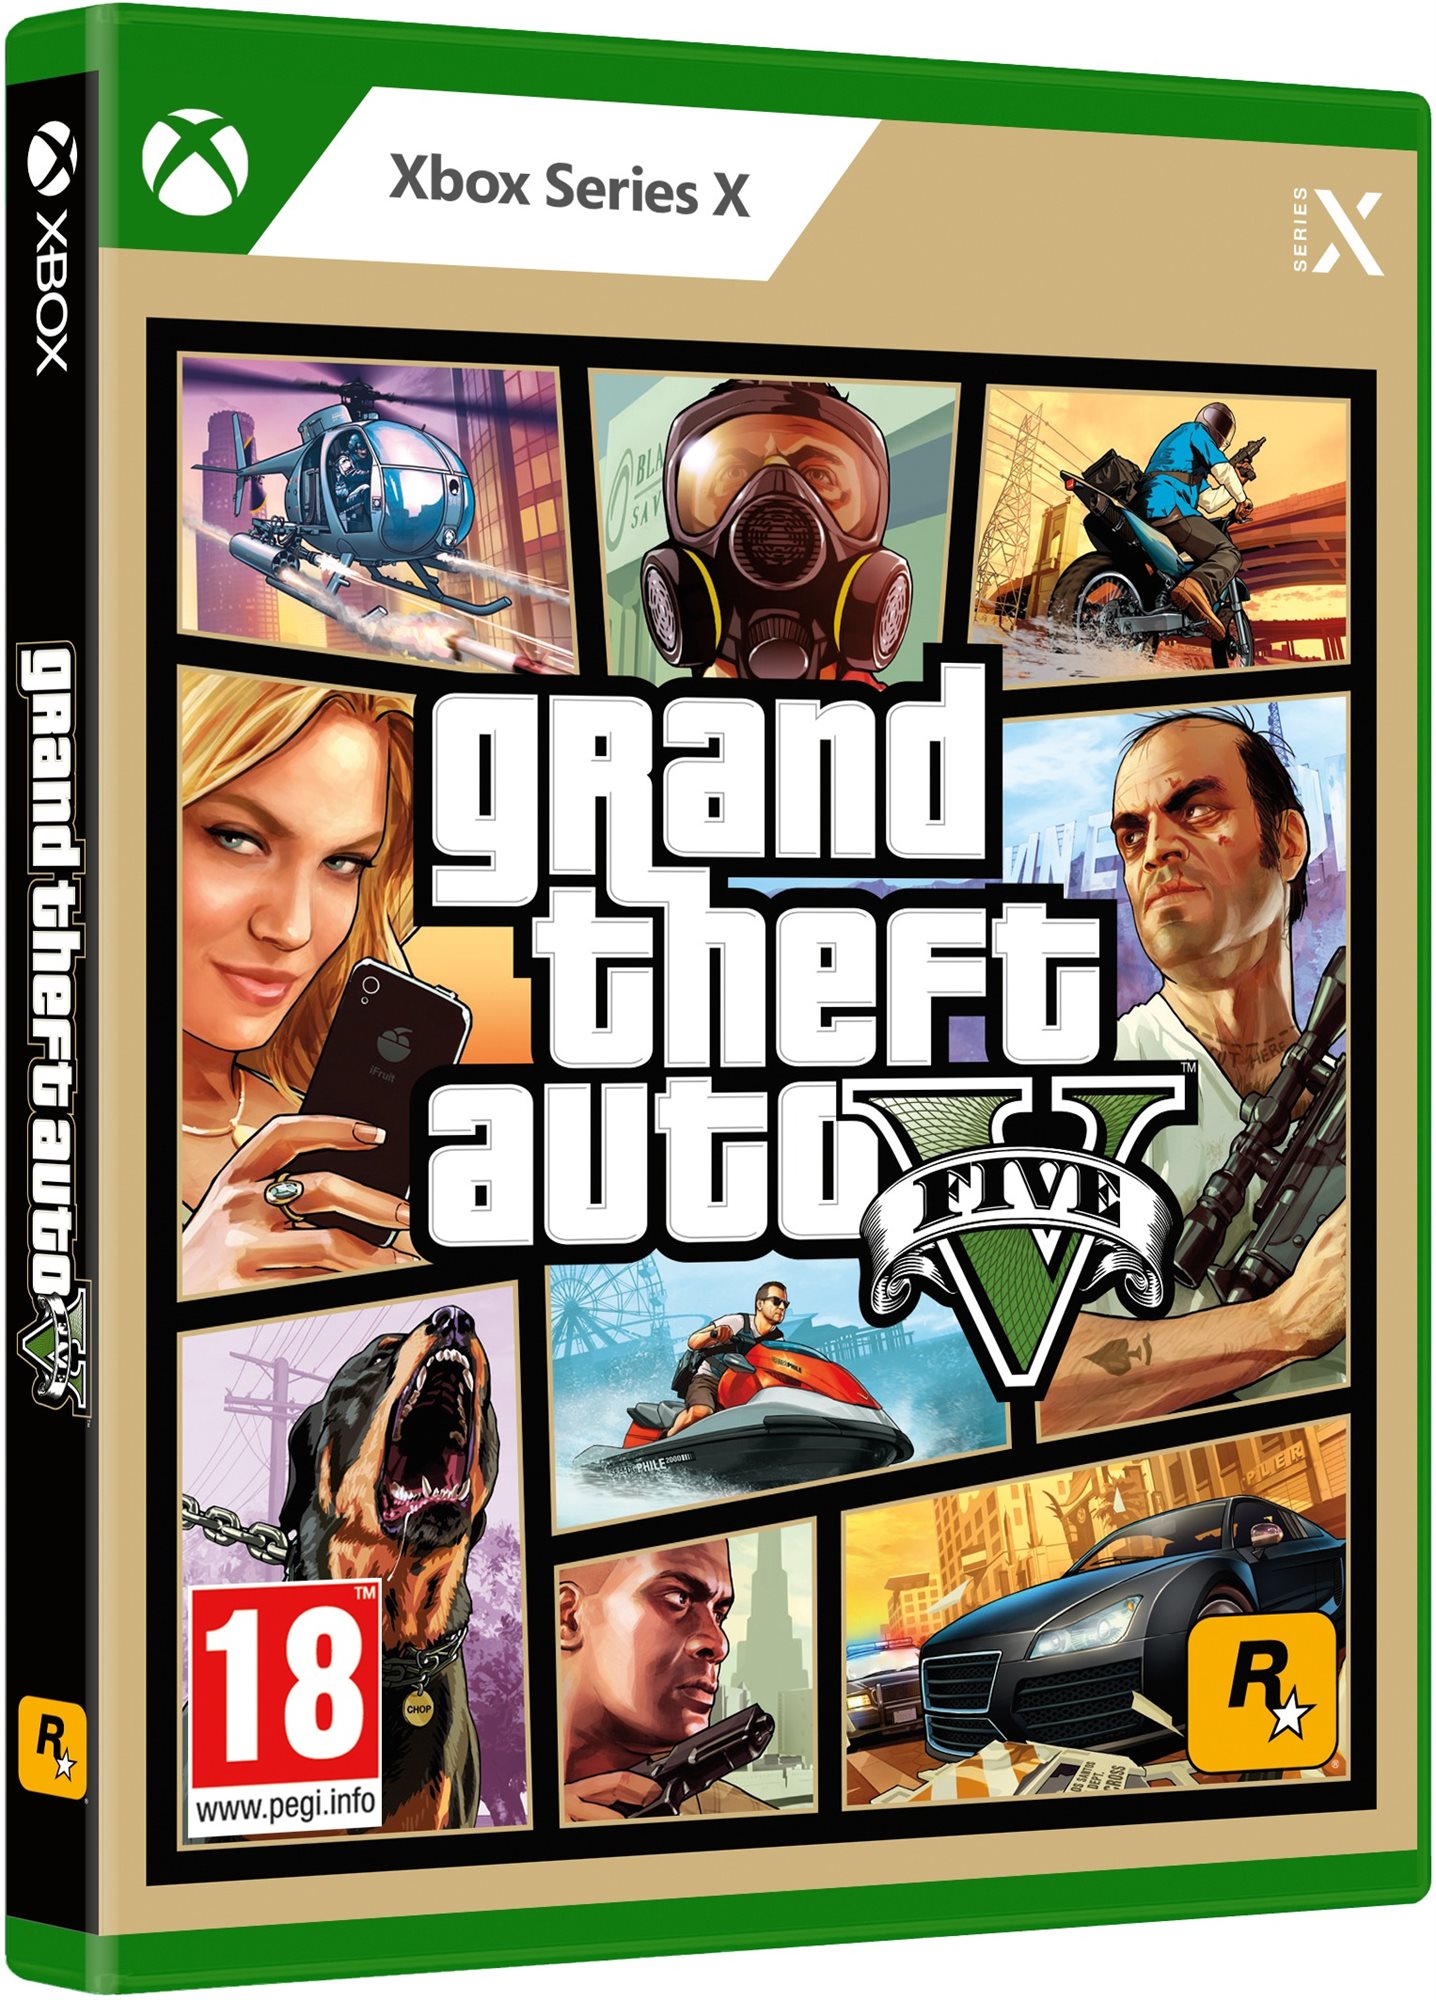 Grand Theft Auto V (GTA 5) - Xbox Series X